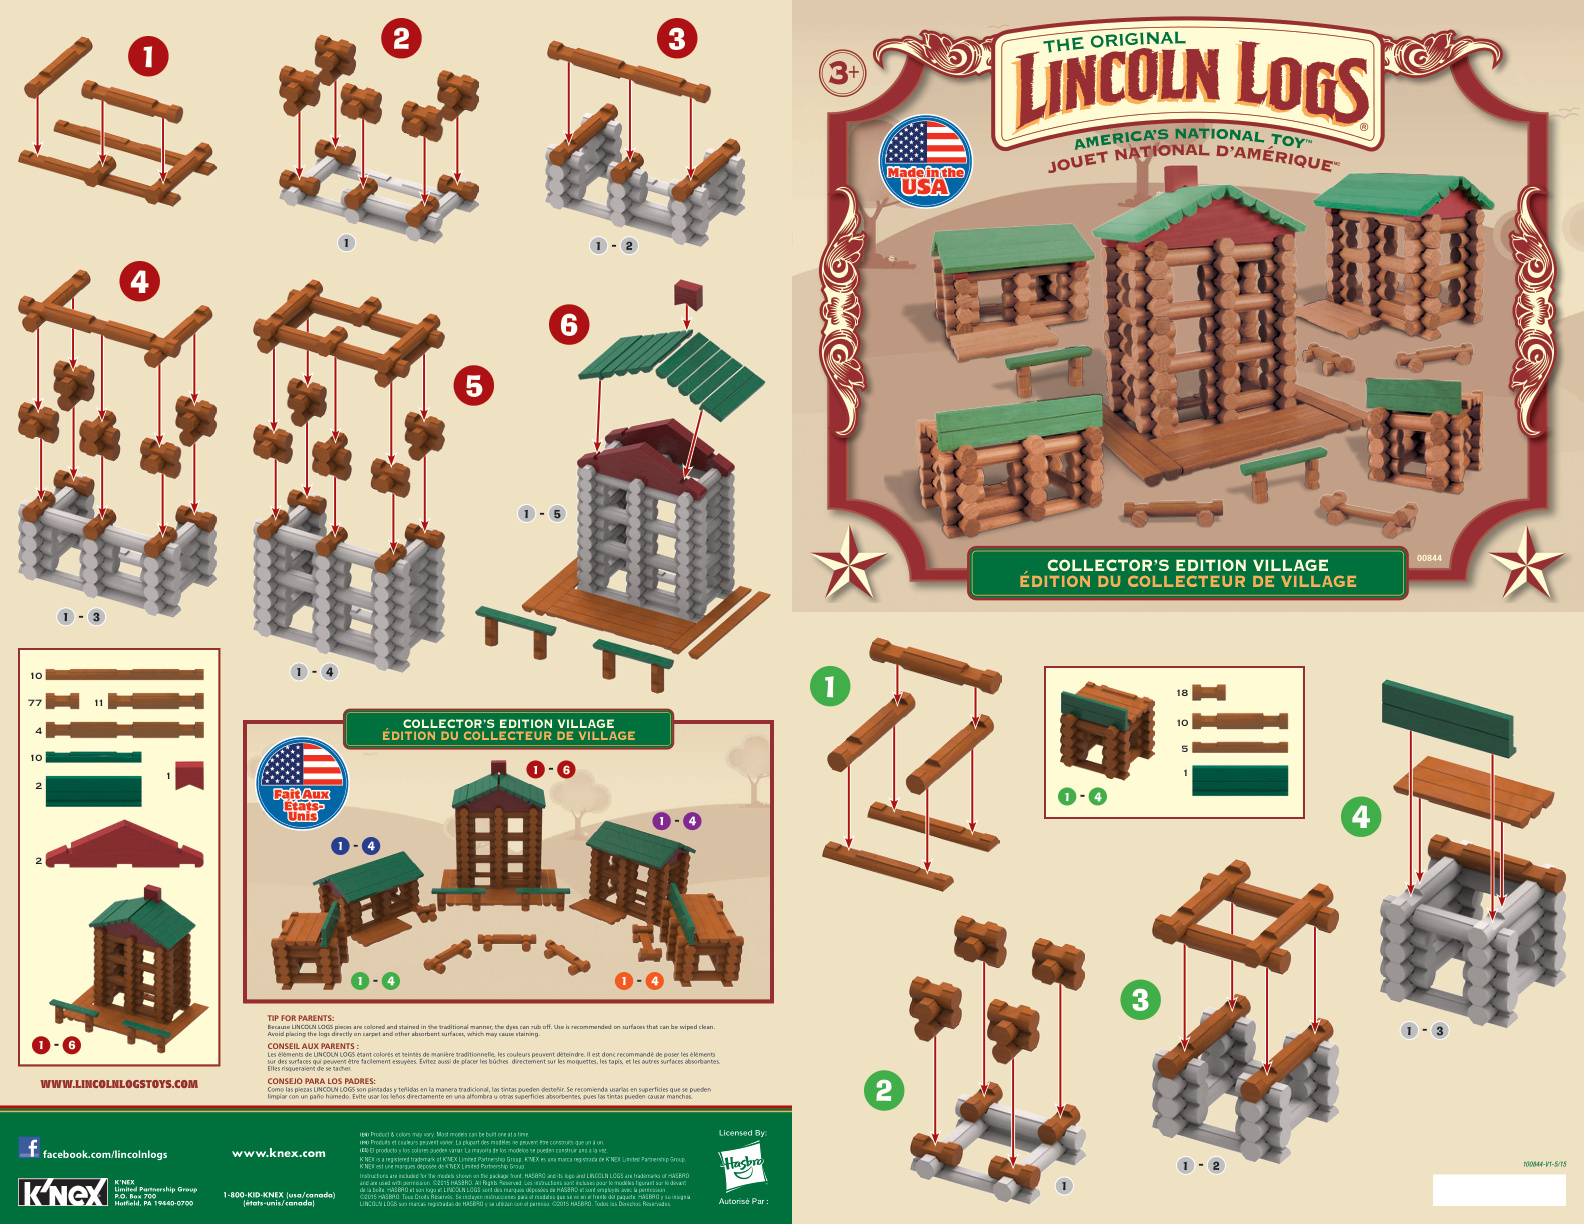 Lincoln Logs Collectors Edition Village 00844